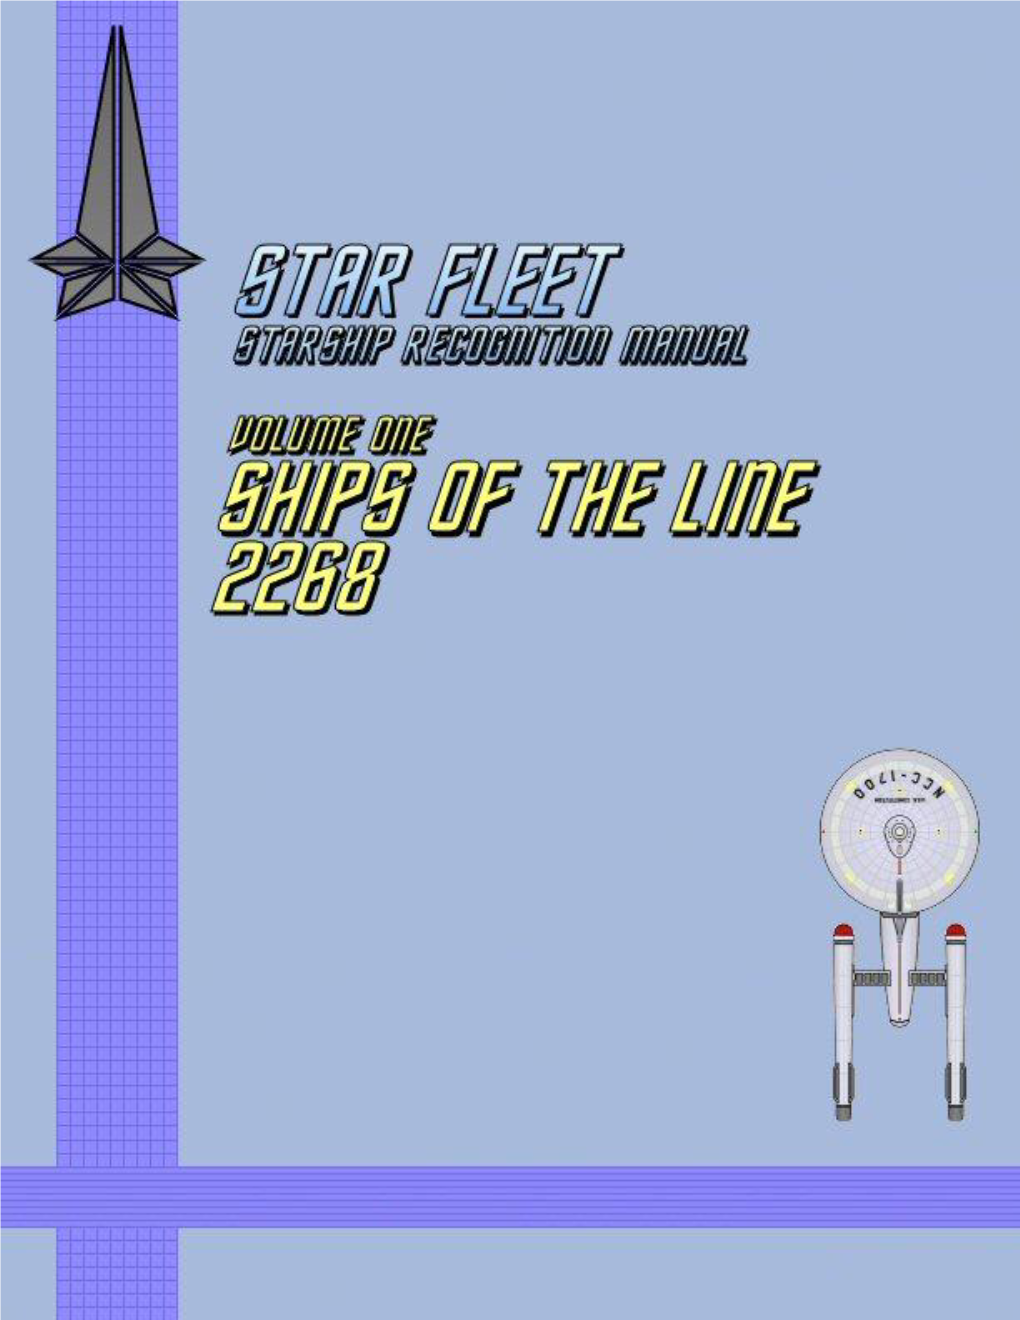 Starfleet Ships of the Line